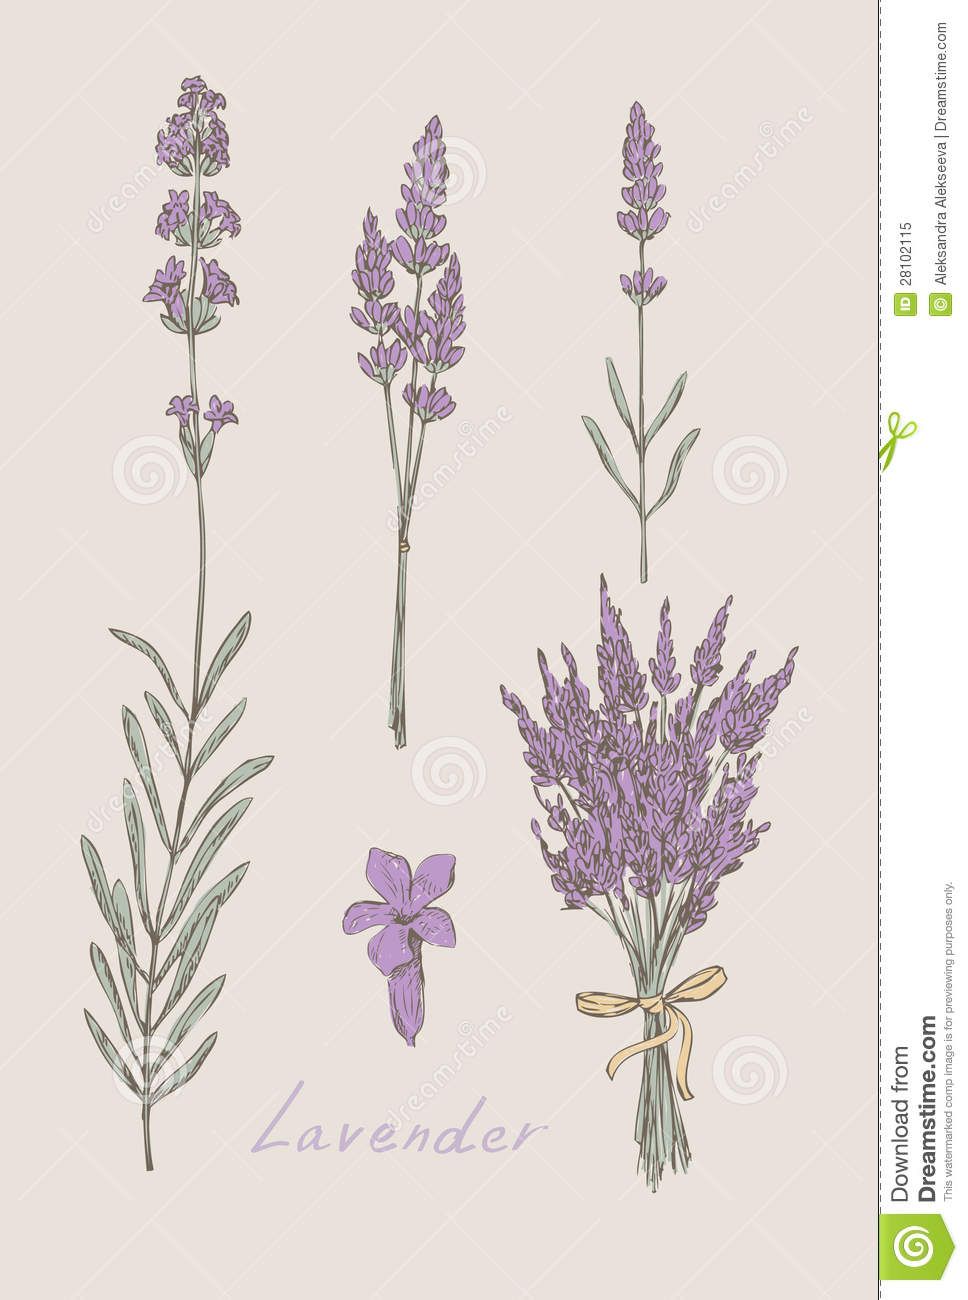 lavender clipart scientific